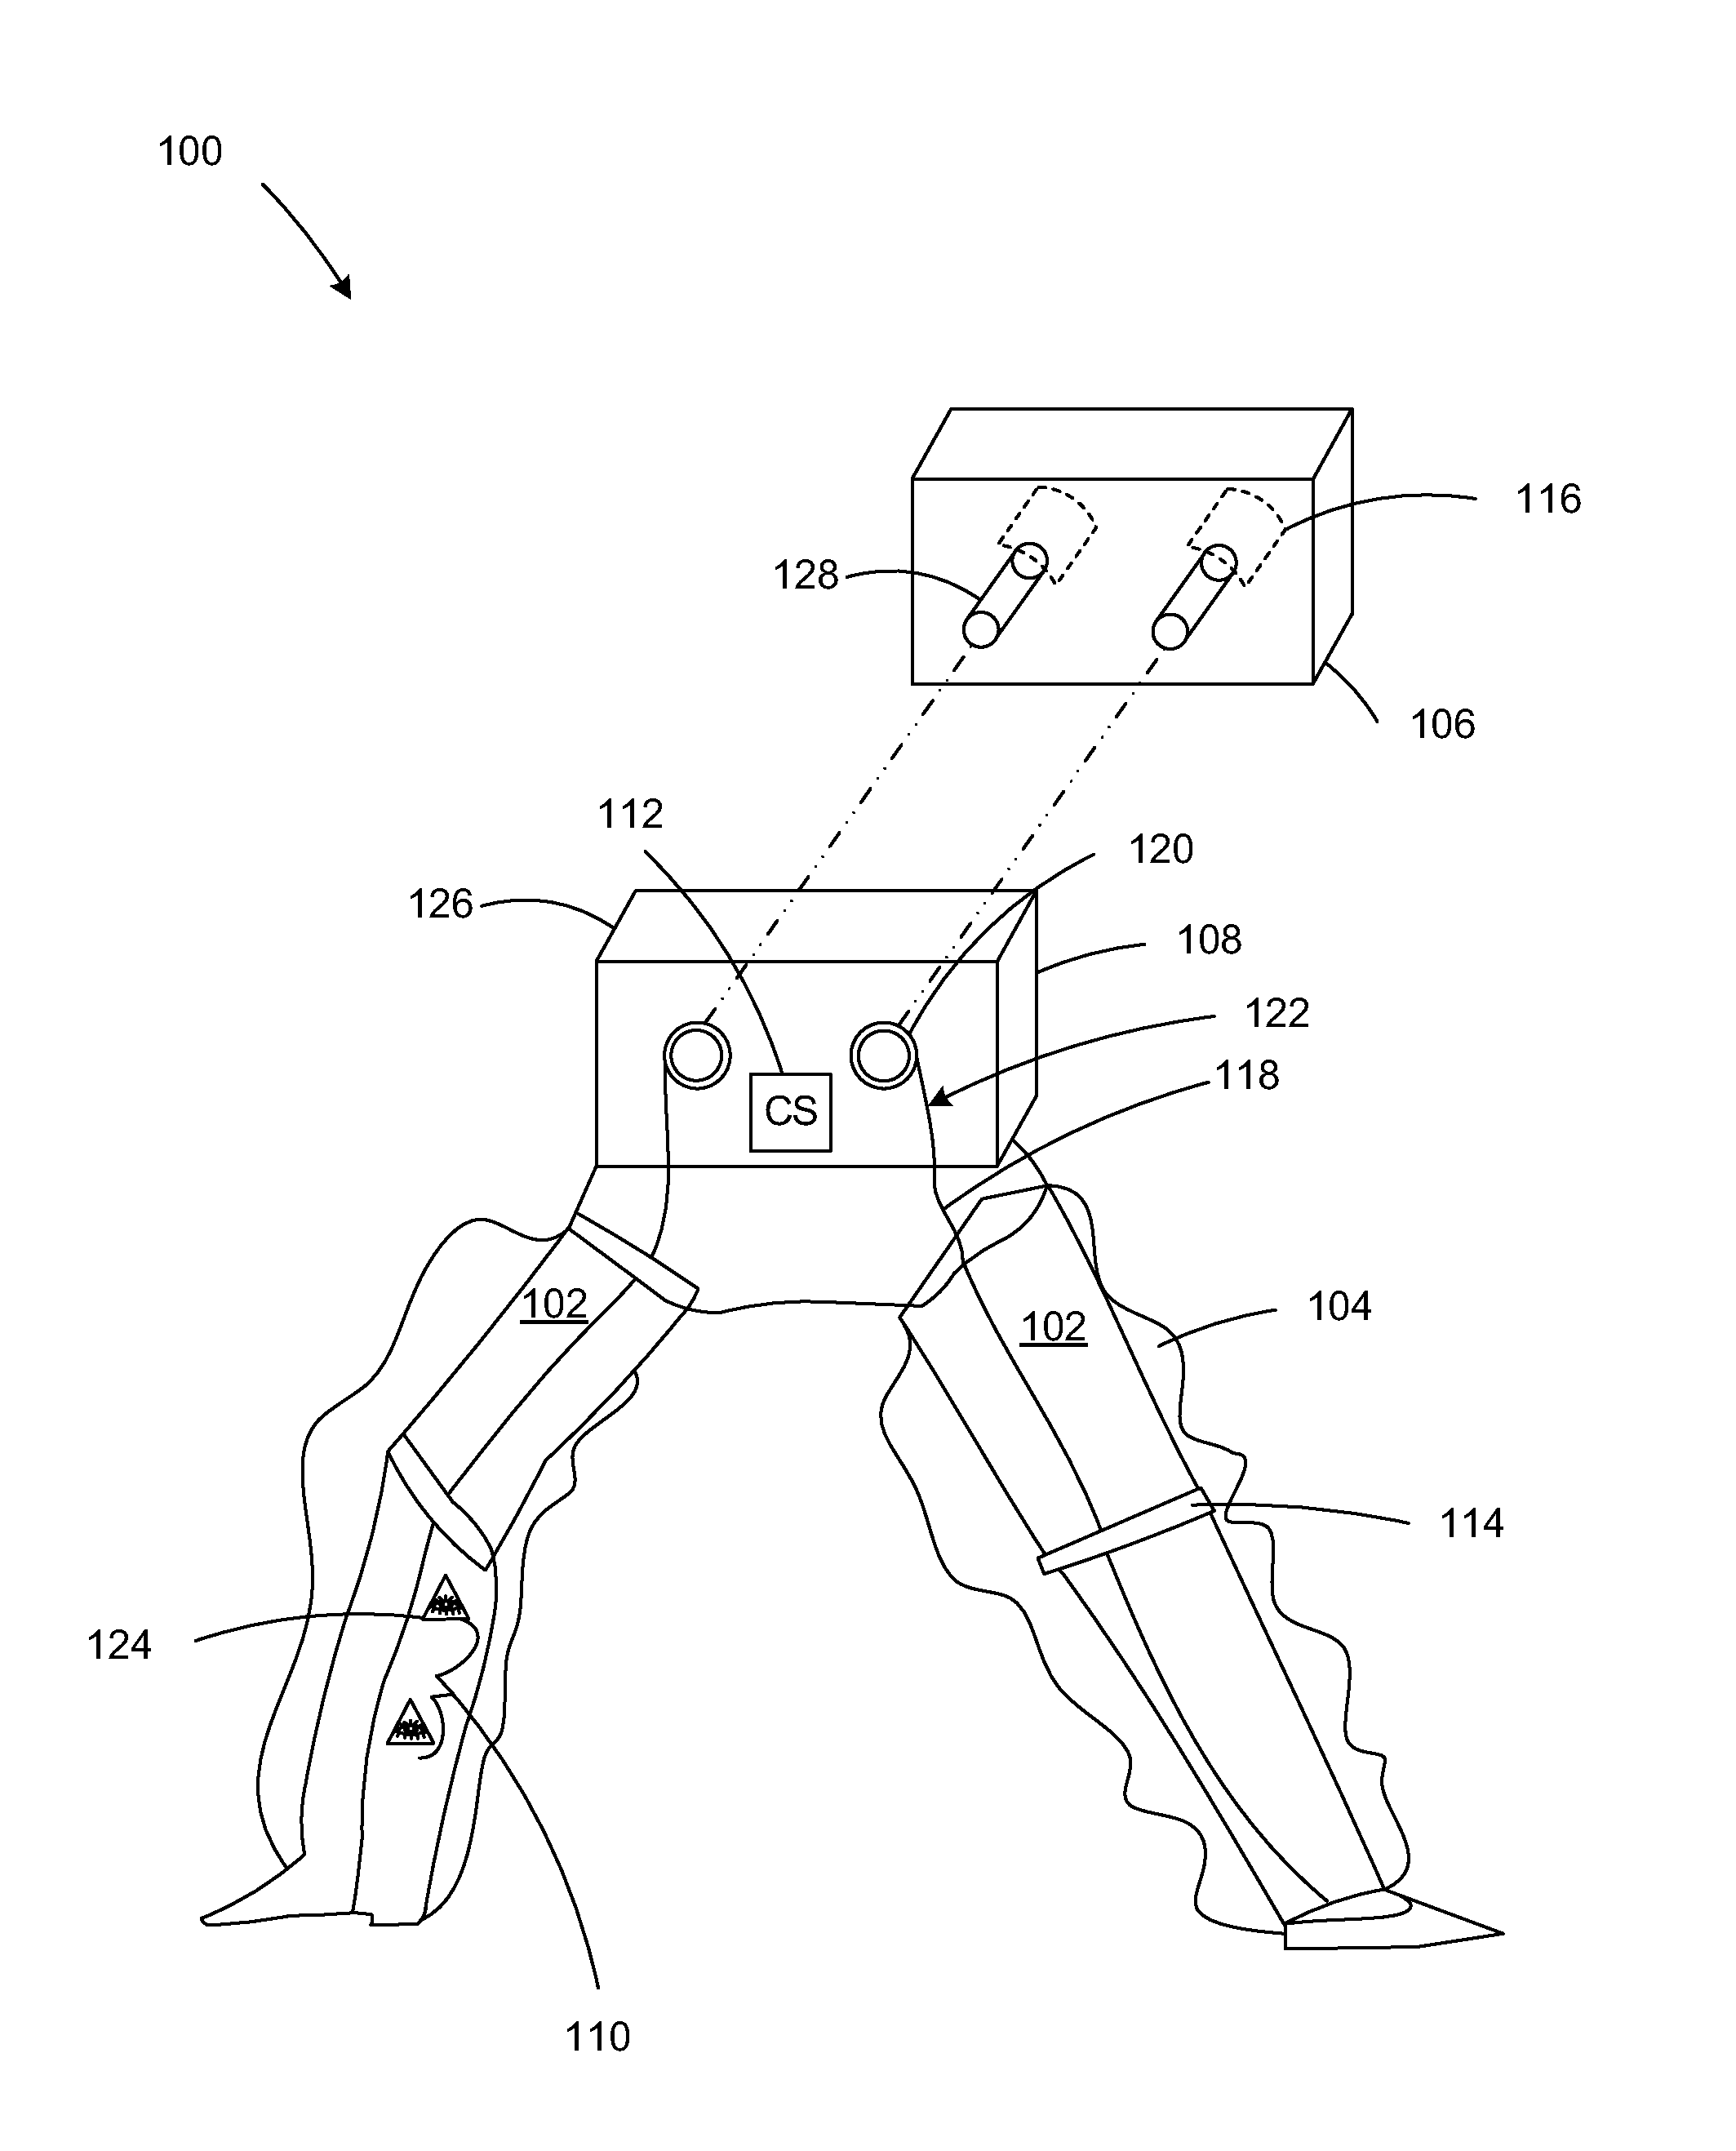 Exoskeleton for gait assistance and rehabilitation